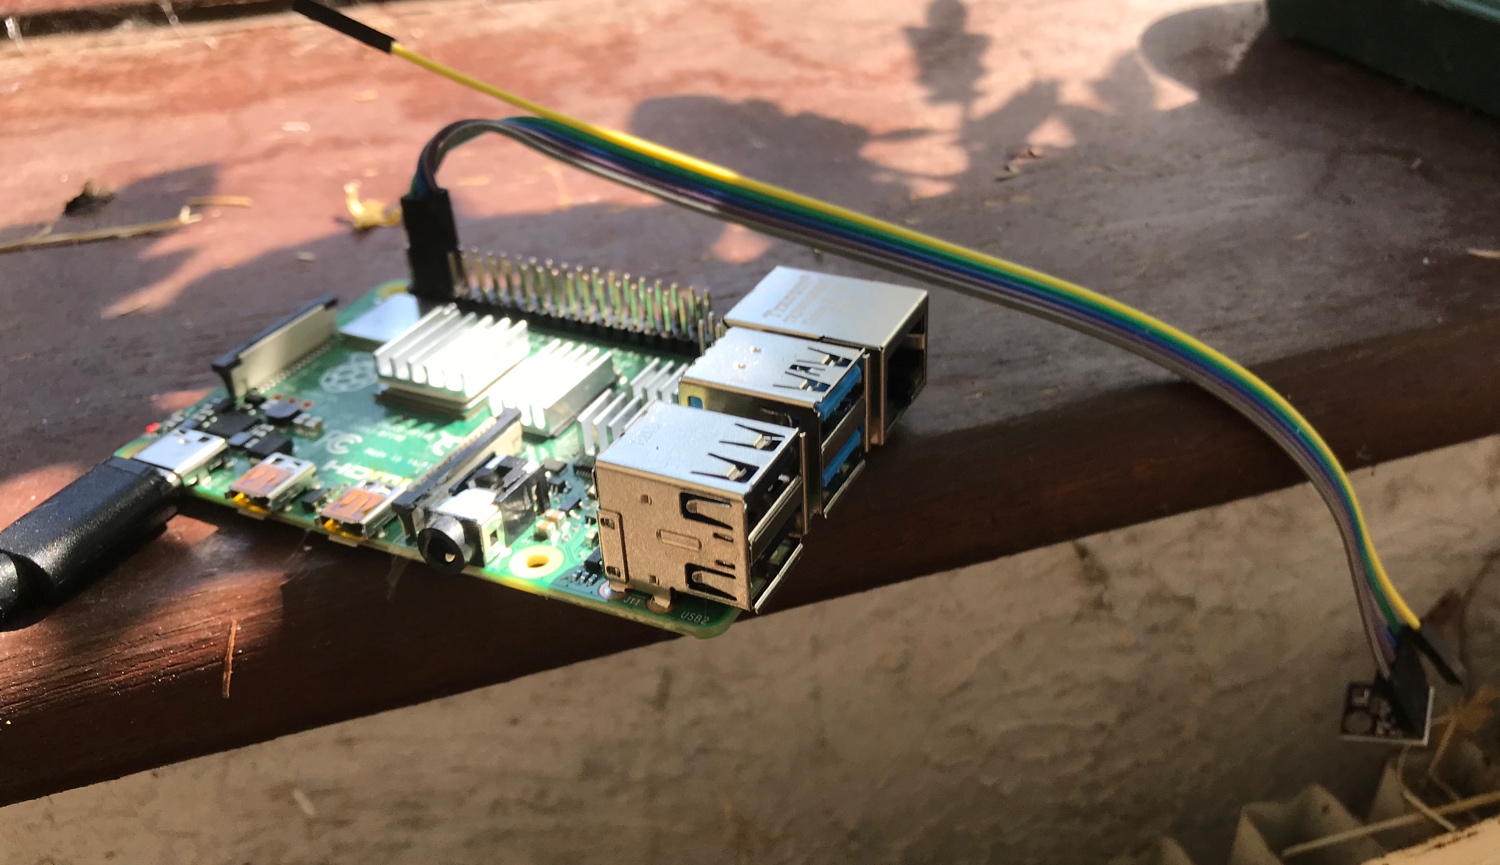 Raspberry Pi and attached sensor